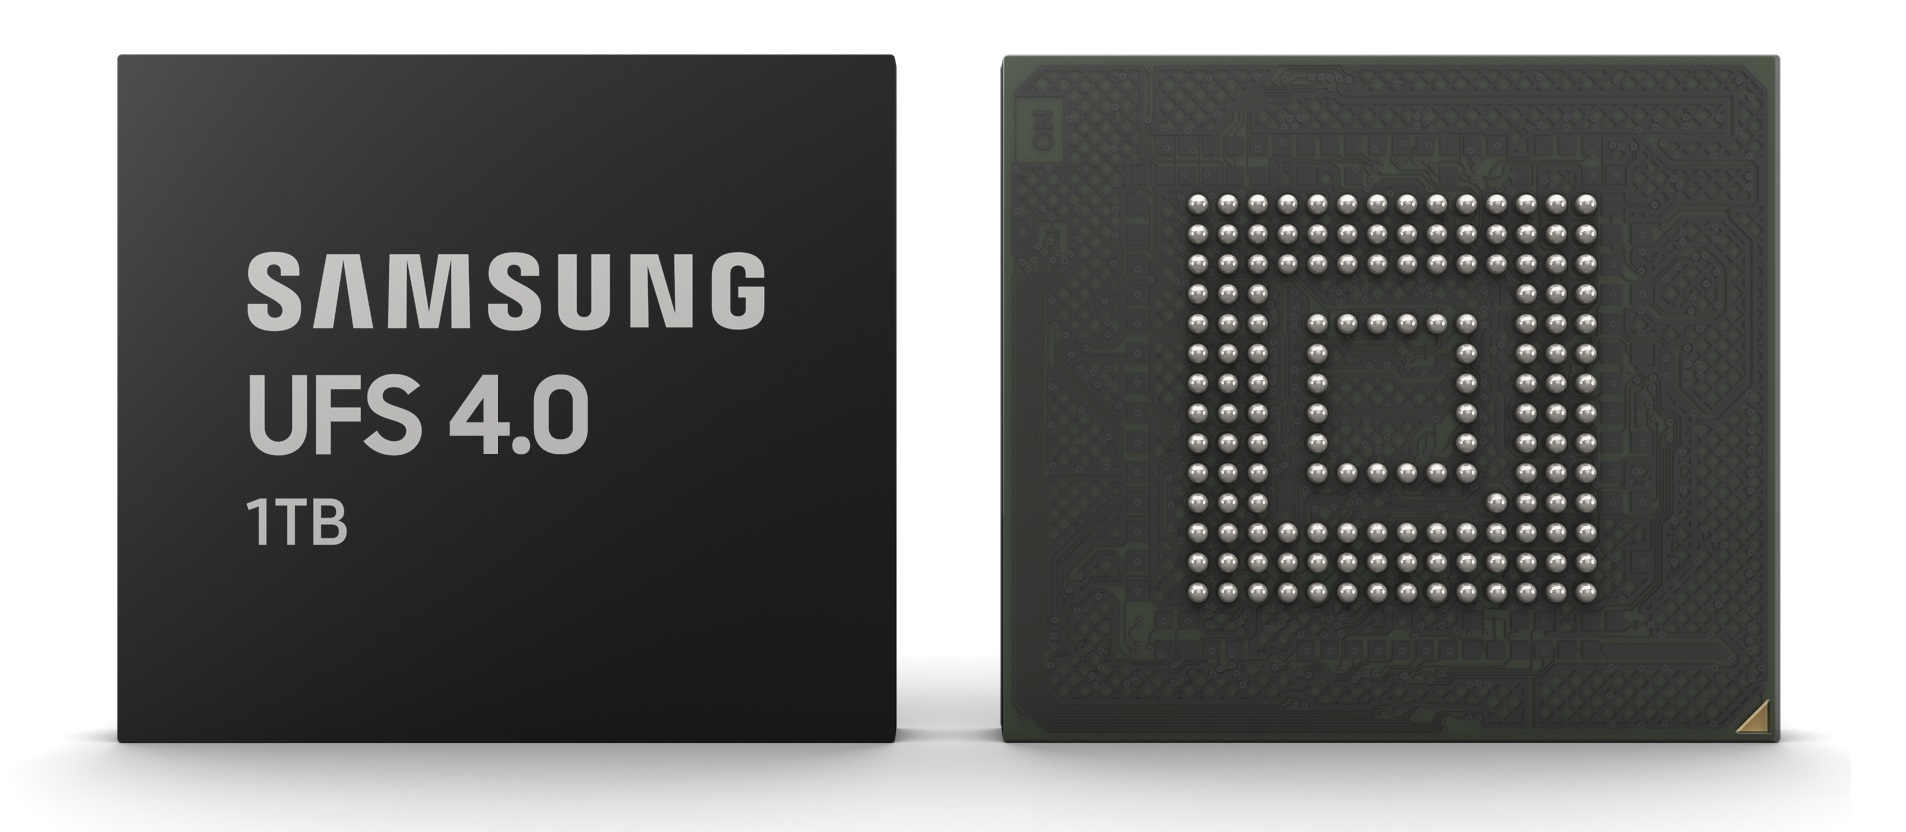 Samsung announces UFS 4.0 flash memory standard